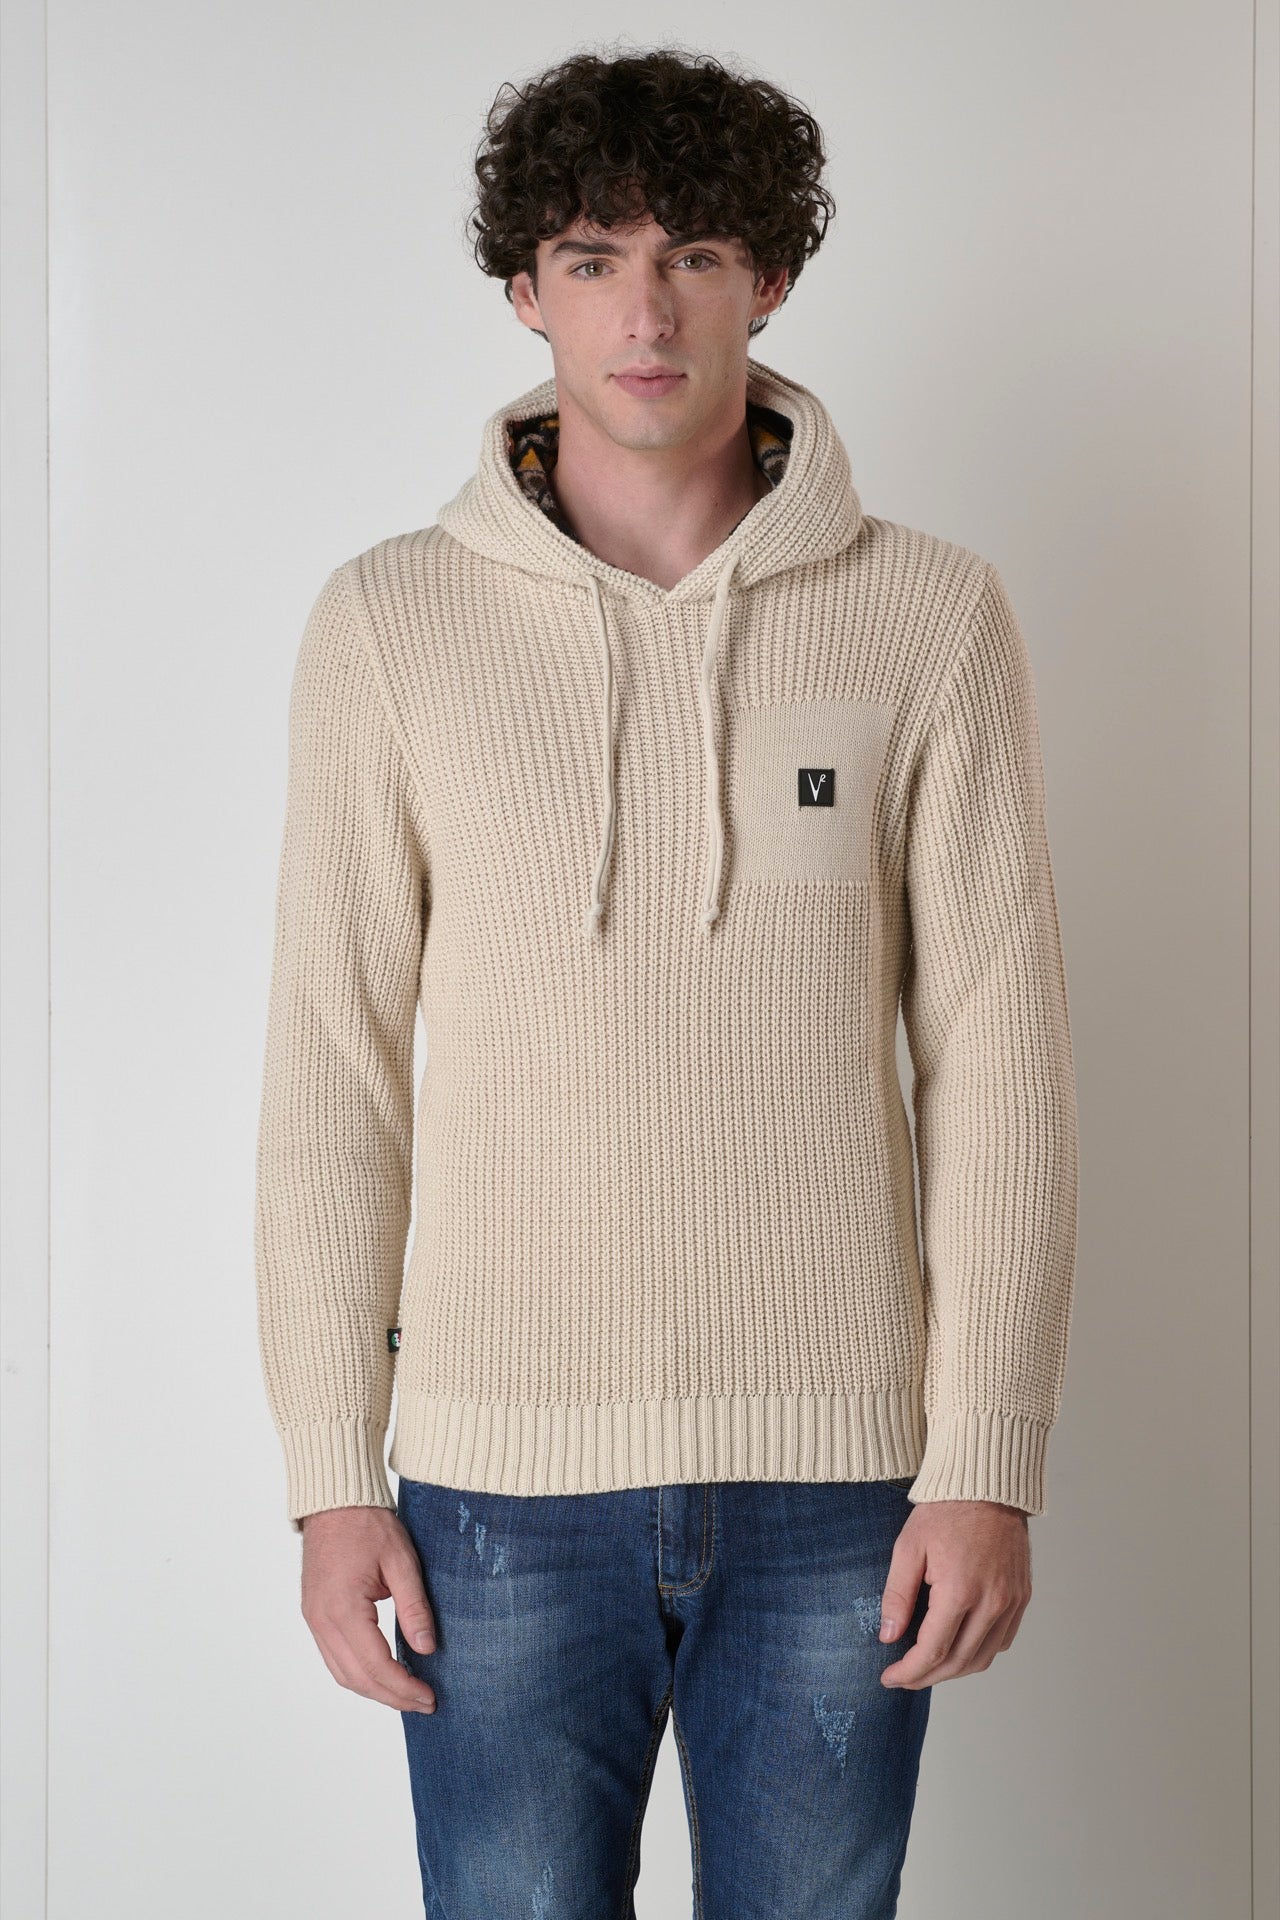 Burro knitwear sweatshirt with internal hood in V2 fabric